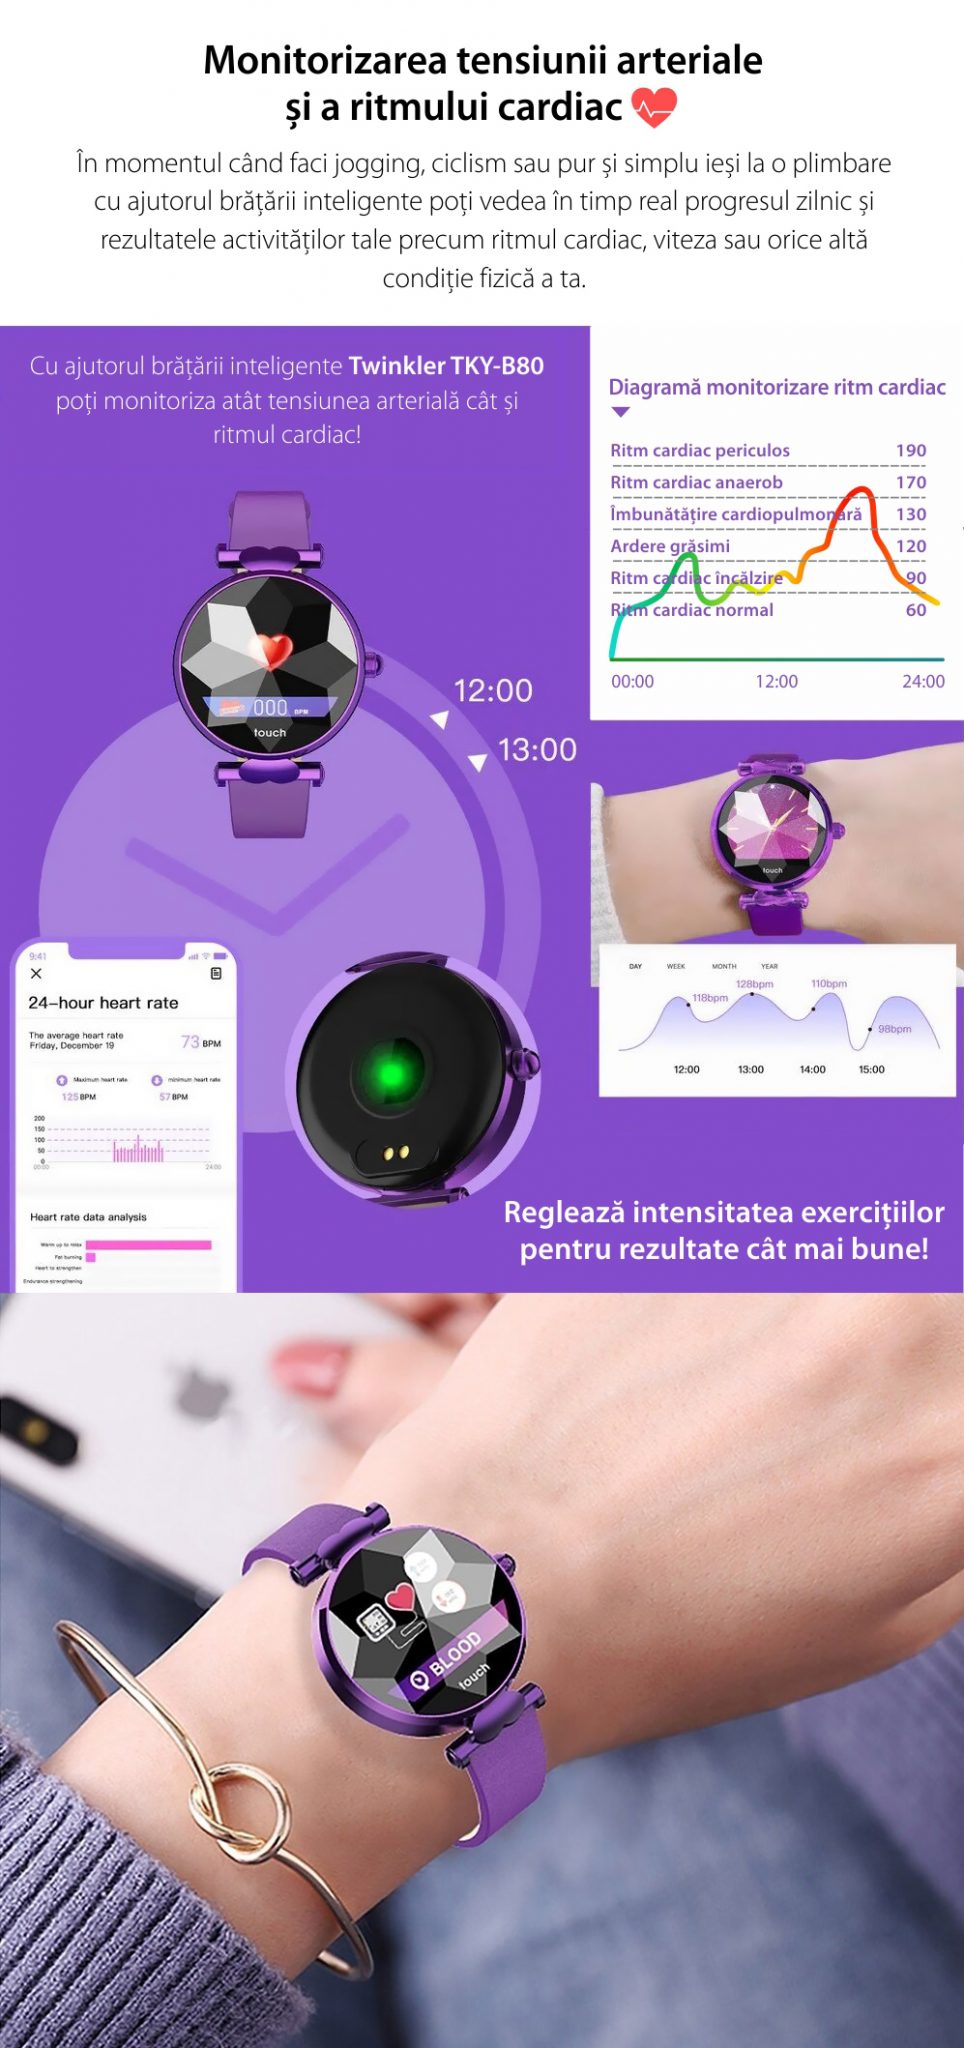 Ceas Smartwatch fitness fashion TKY-B80 Metal cu functie de monitorizare ritm cardiac, Tensiune arteriala, Monitorizare somn, Notificari Apel/ SMS, Auriu